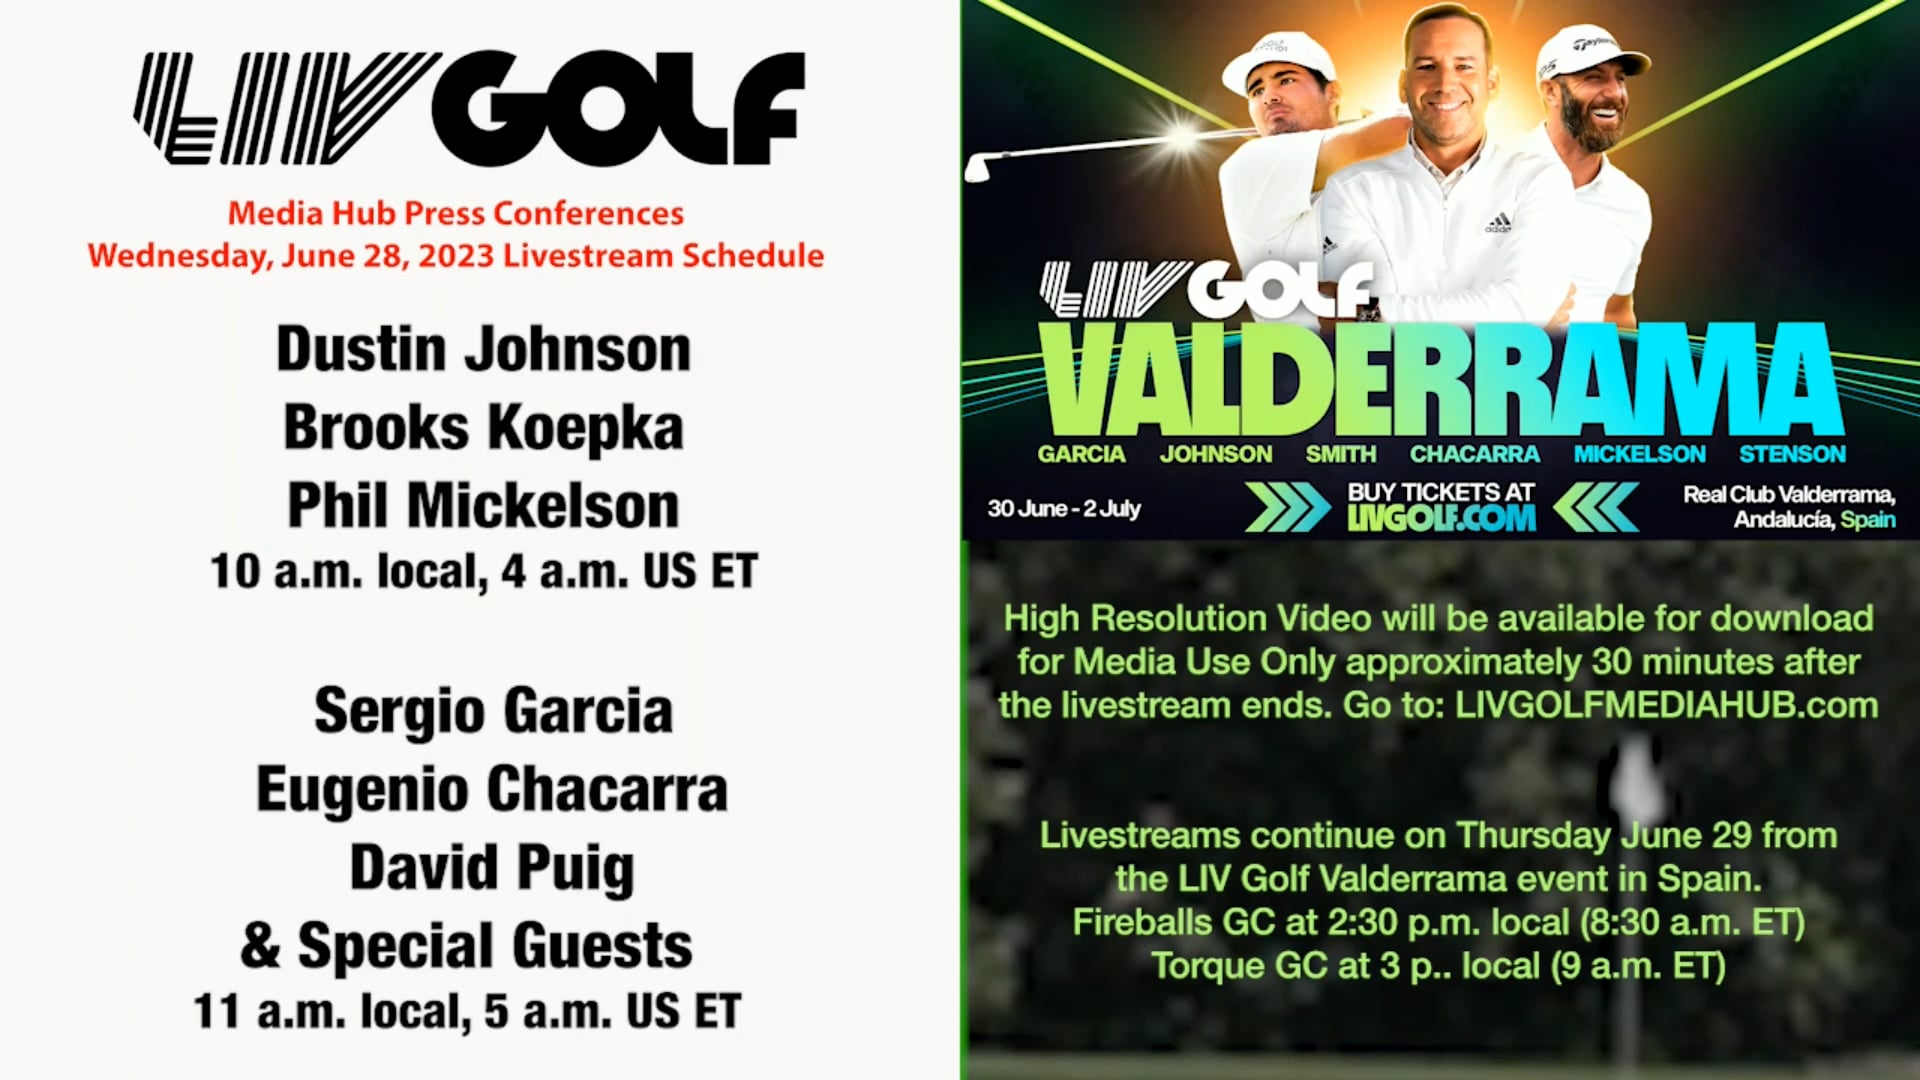 LIV Golf Valderrama Wednesday Presser Livestream on Vimeo